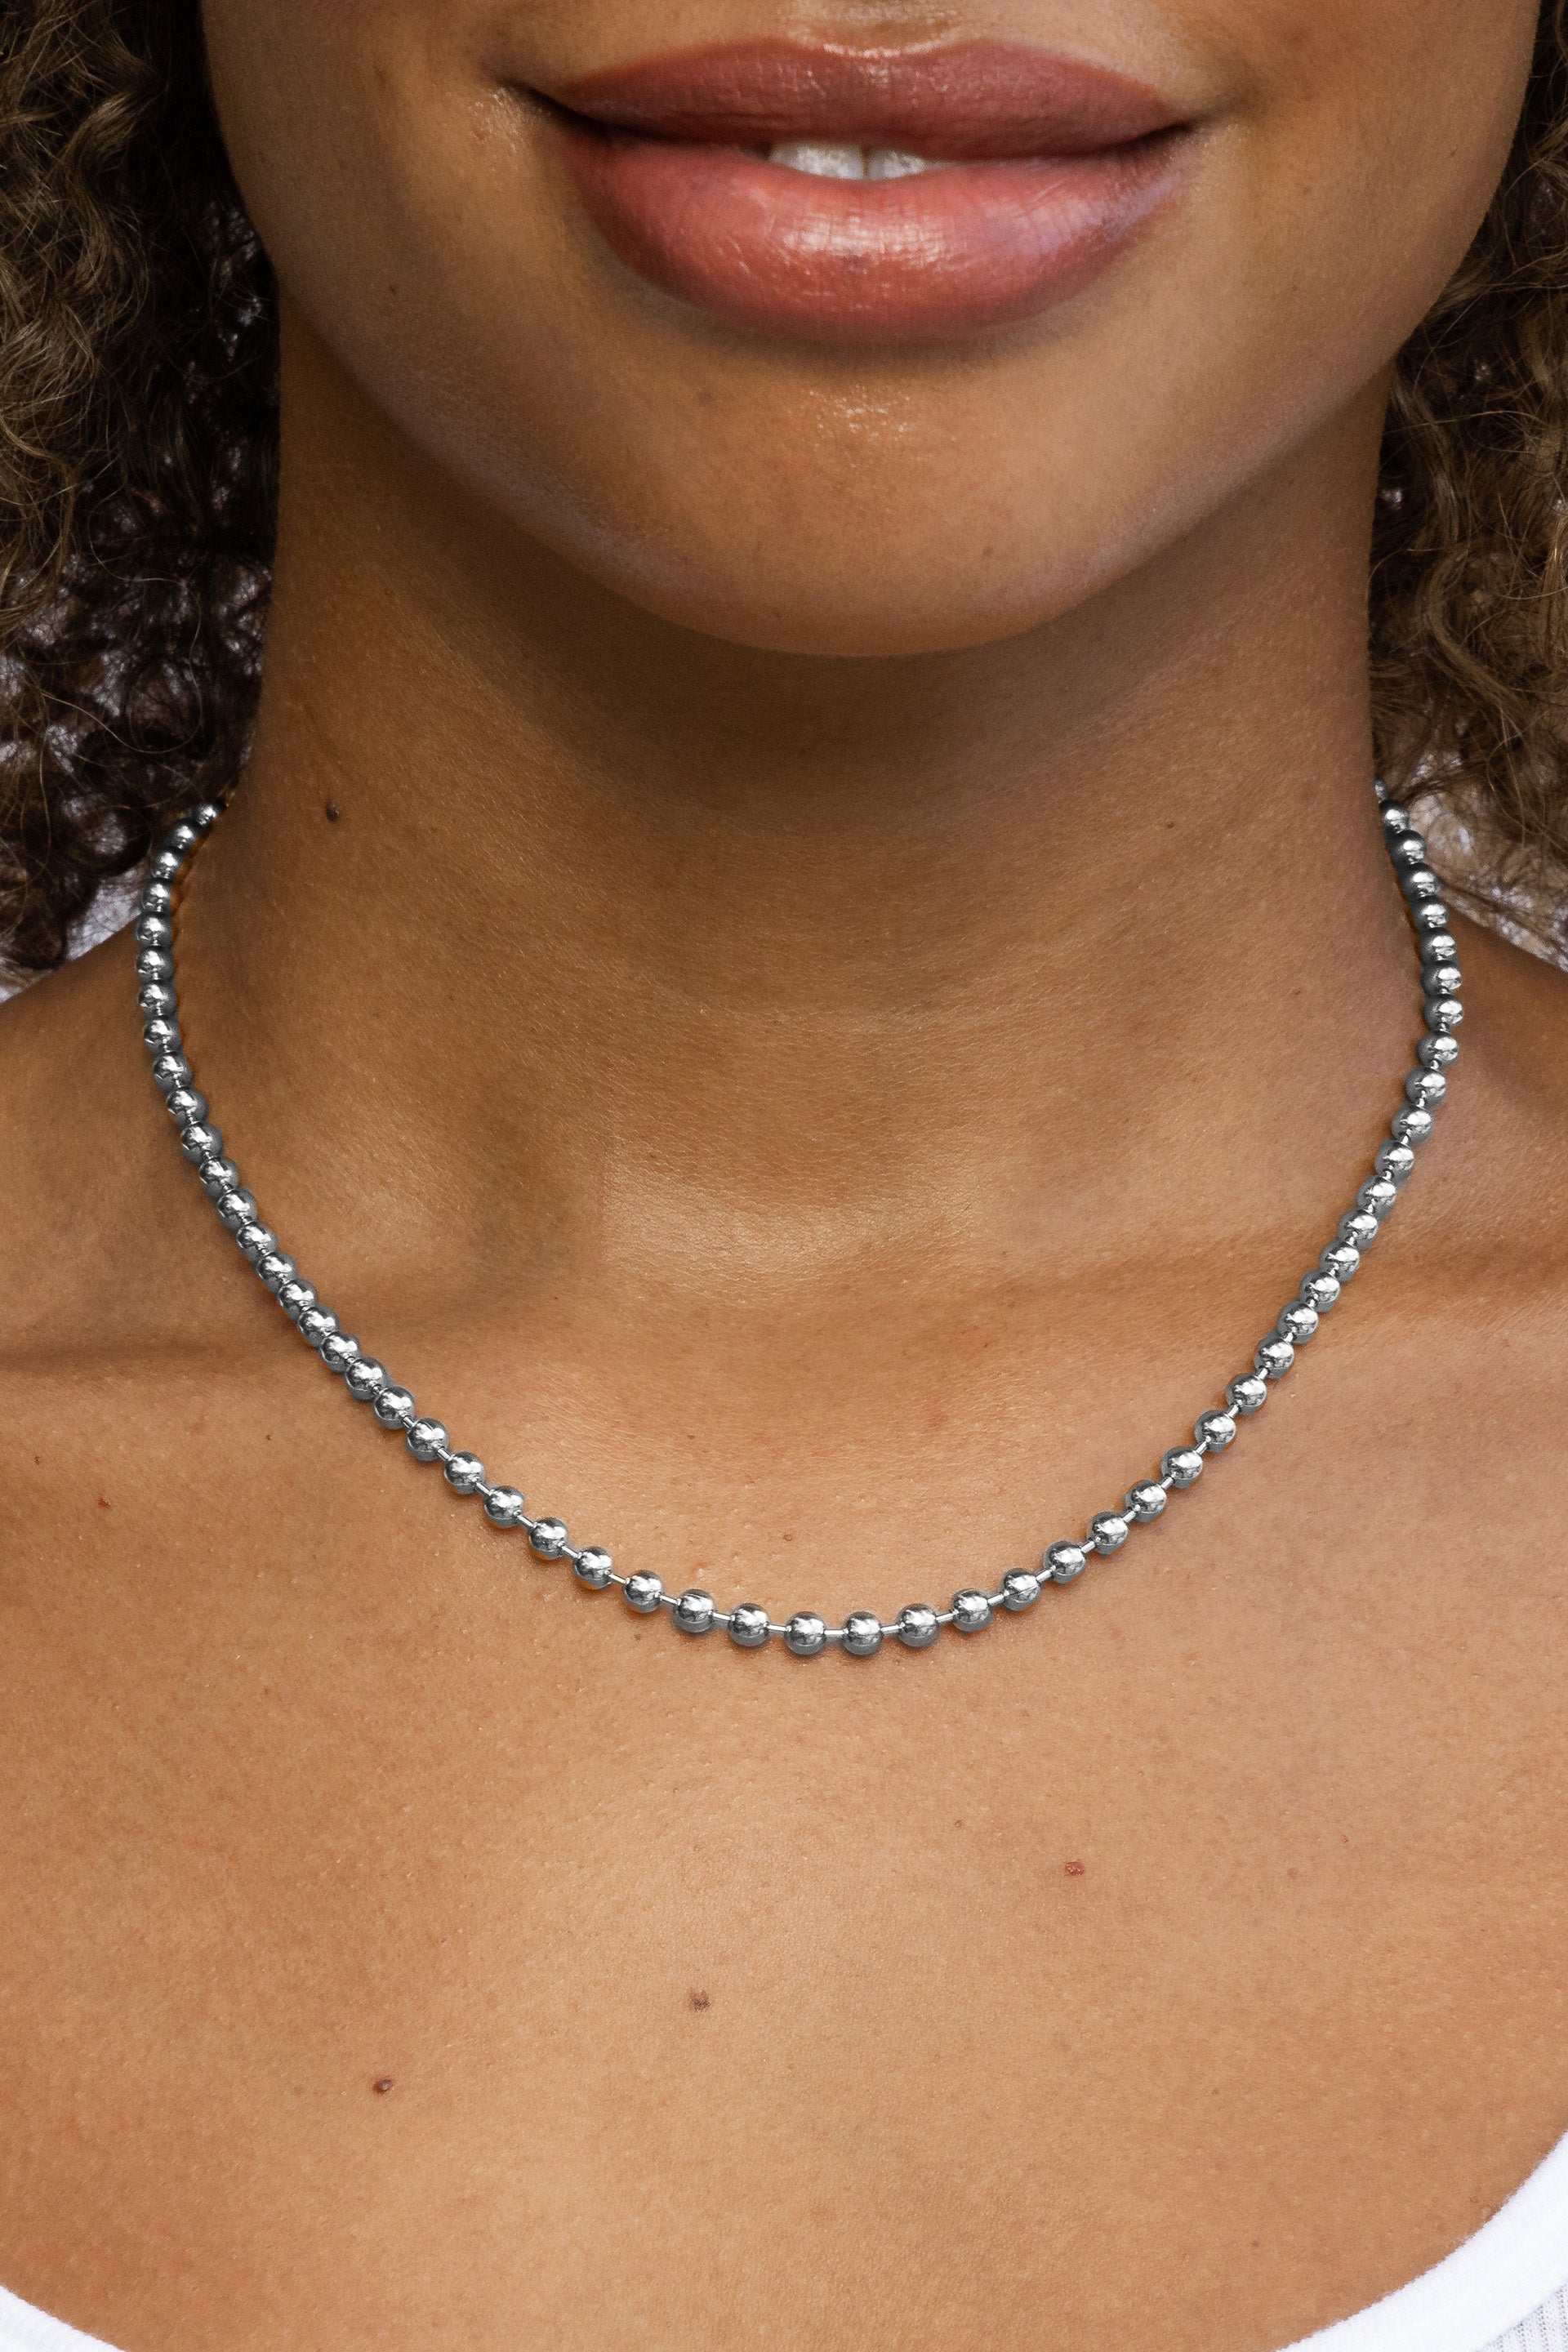 EXTENDER FOR - Tennis Necklace, Bracelet extender Bridal Set Jewellery  Extender | eBay